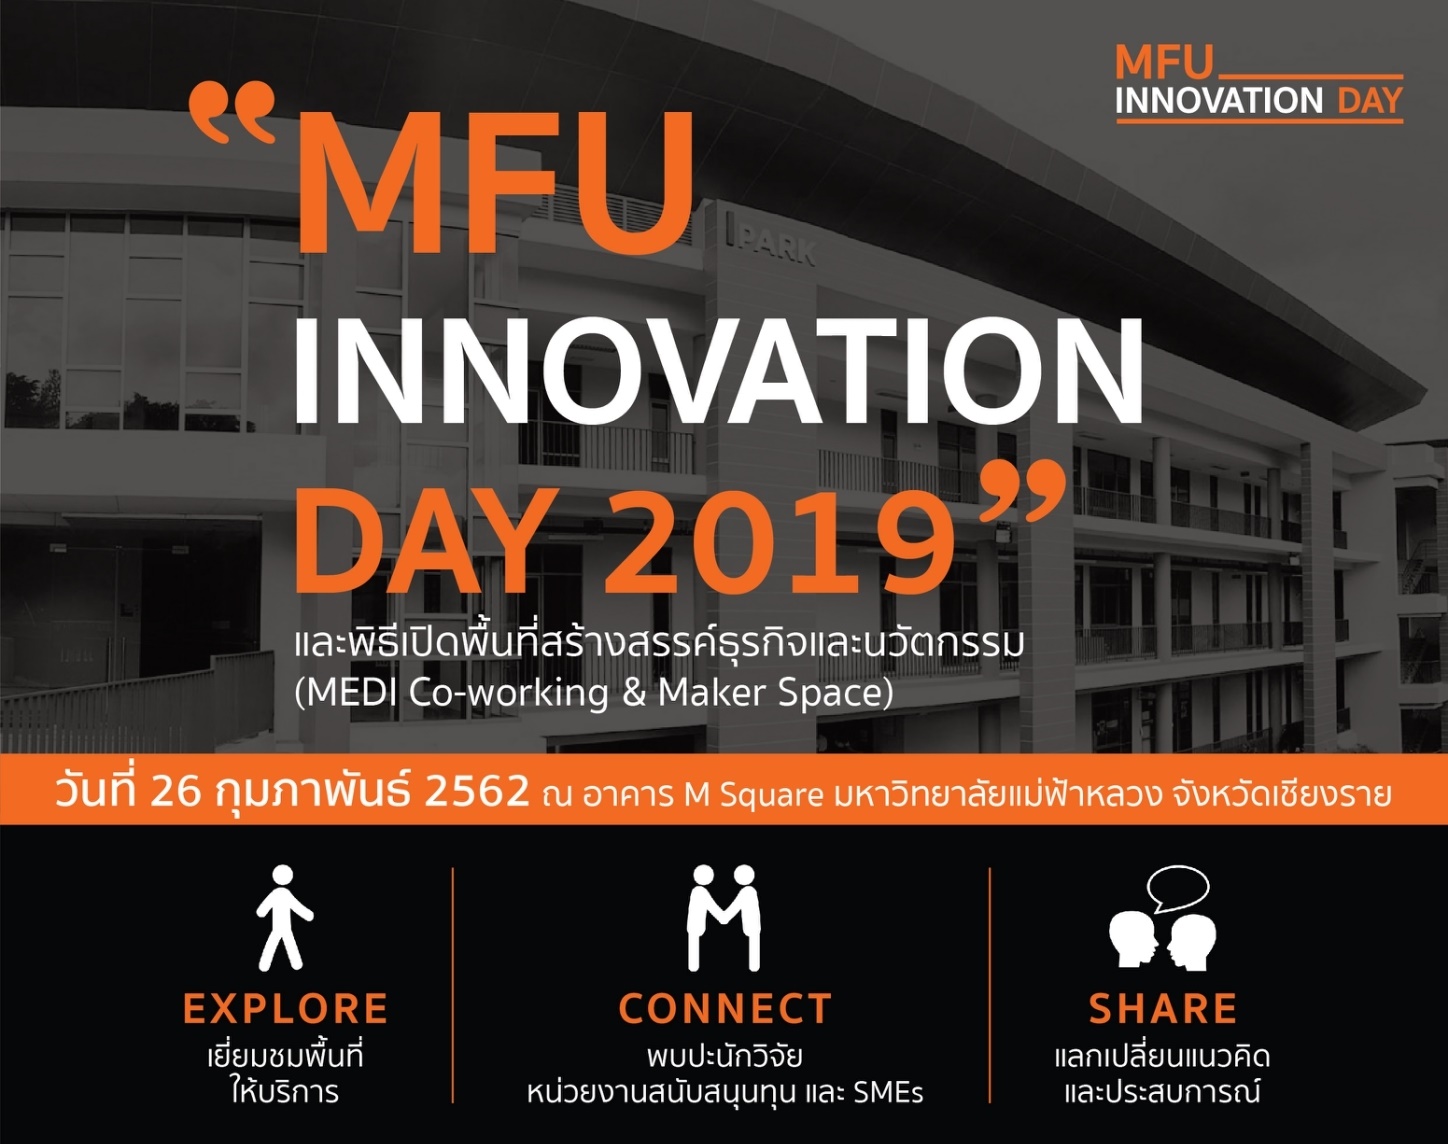 MFii ขอเชิญร่วมงาน MFU Innovation Day 2019 วันที่ 26 ก.พ. 62